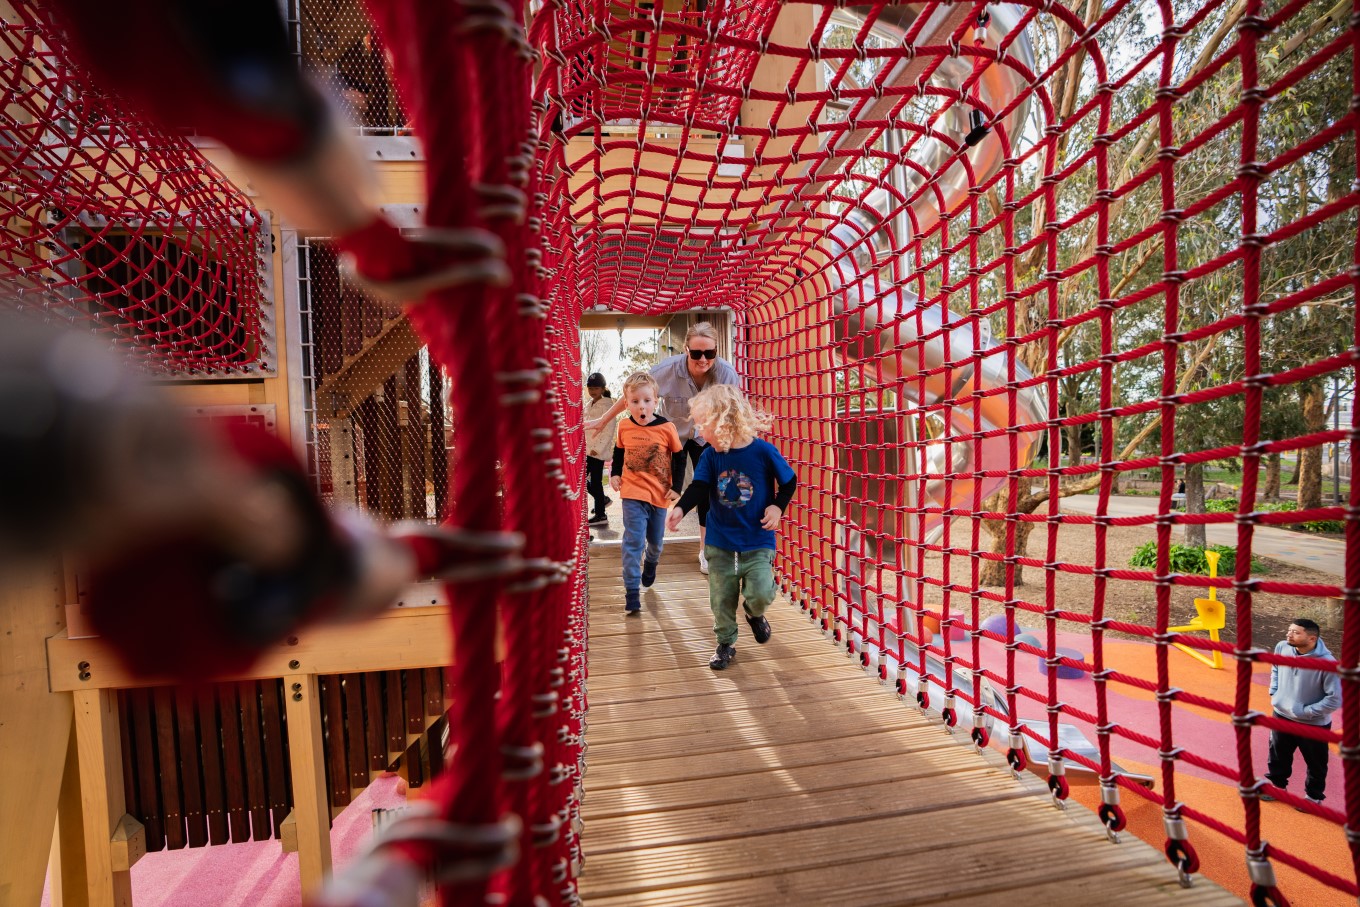 Hayman Park playground in Manukau has fun tunnels to run through in its massive tower.